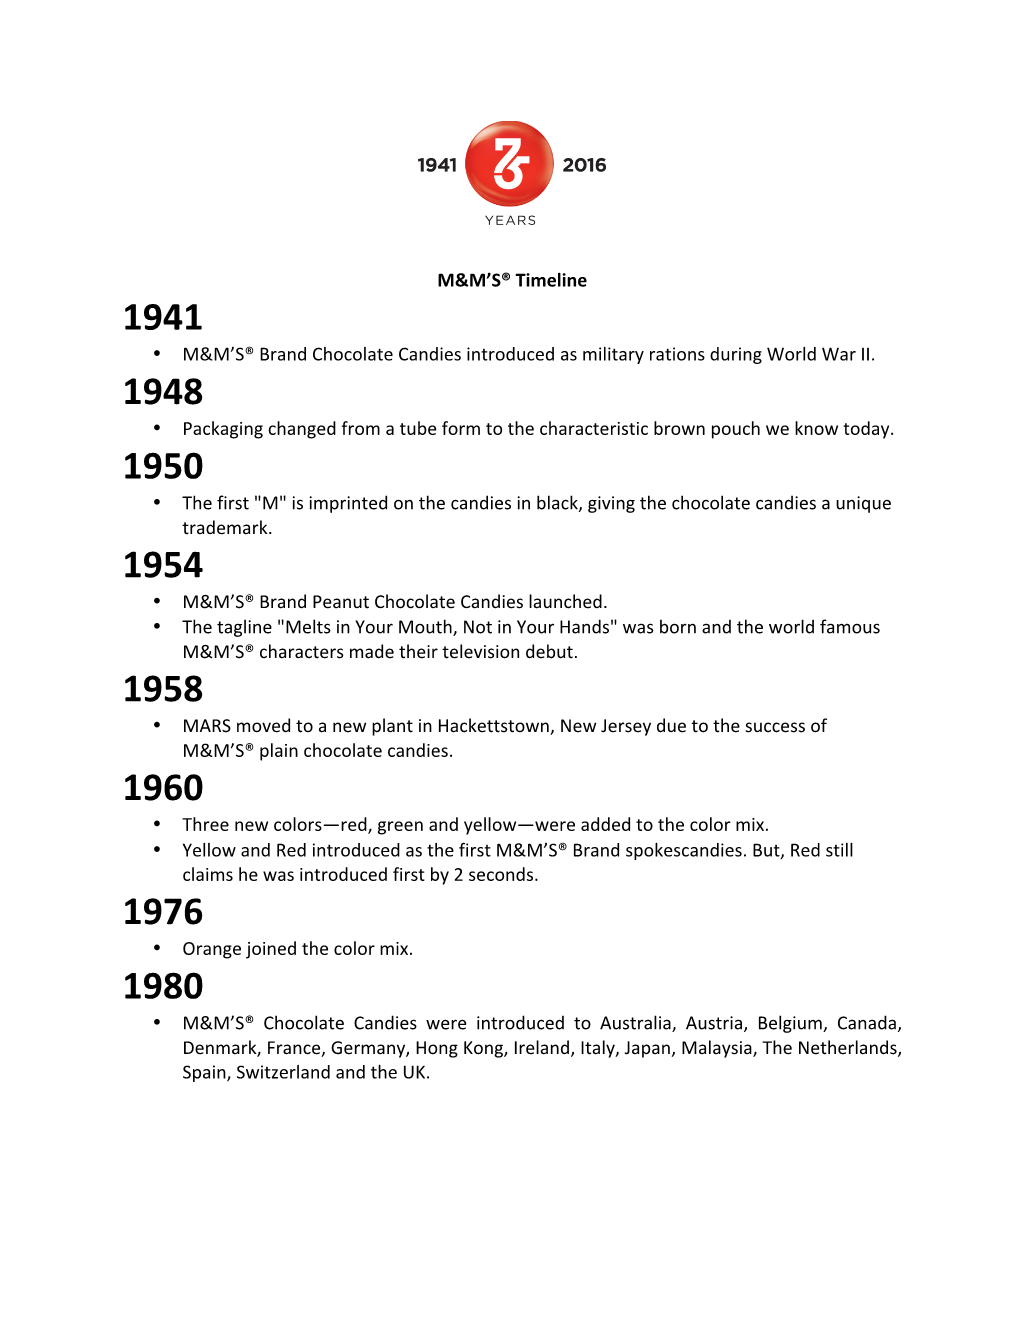 M&M's History Timeline